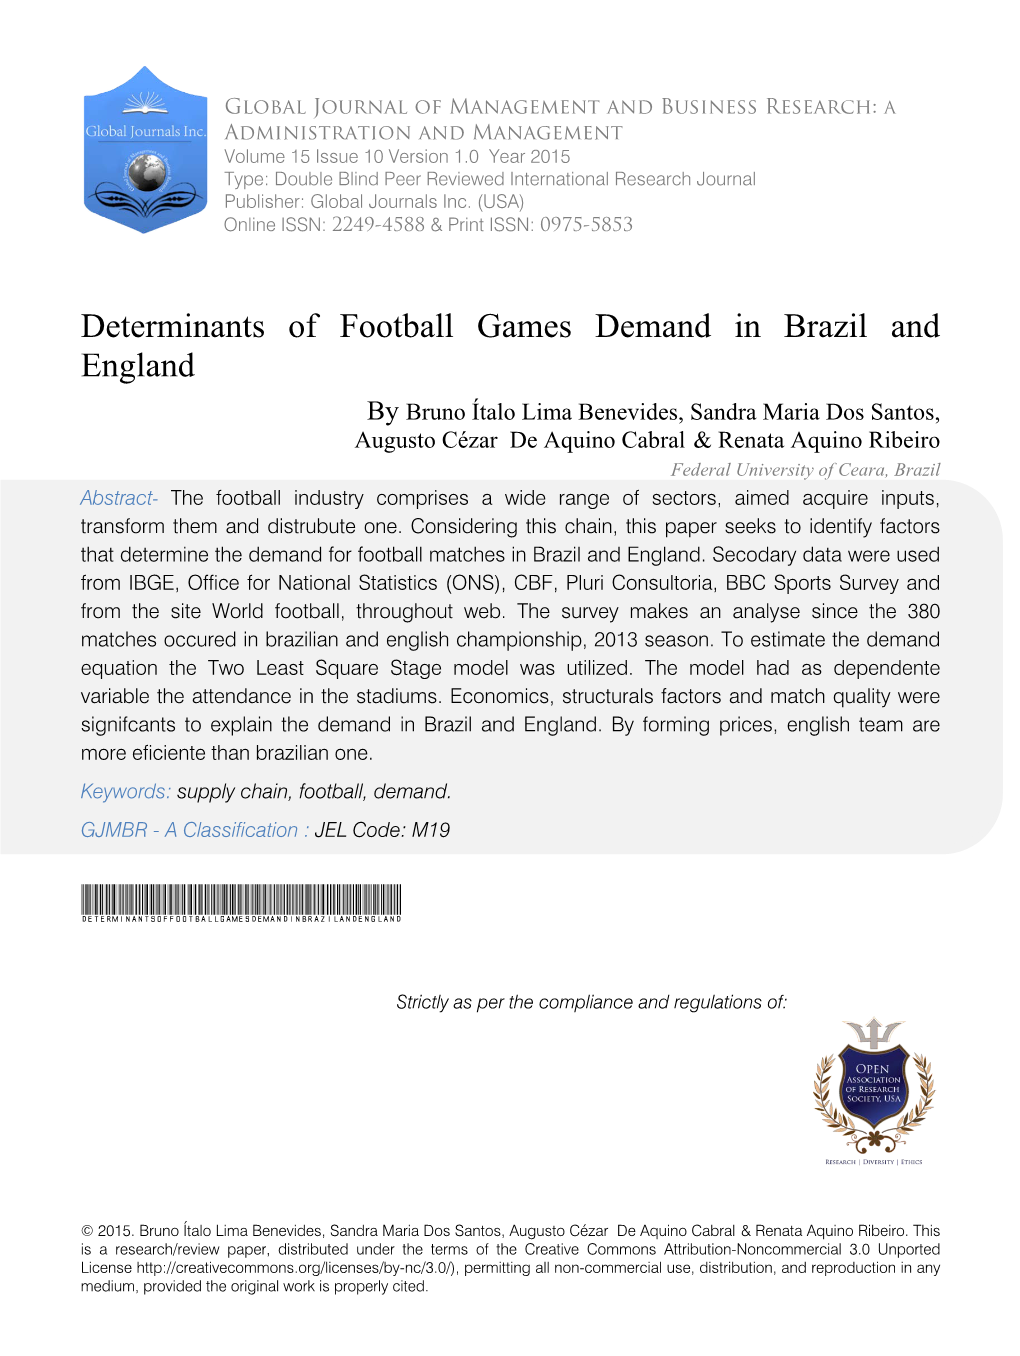 Determinants of Football Games Demand in Brazil and England by Bruno Ítalo Lima Benevides, Sandra Maria Dos Santos